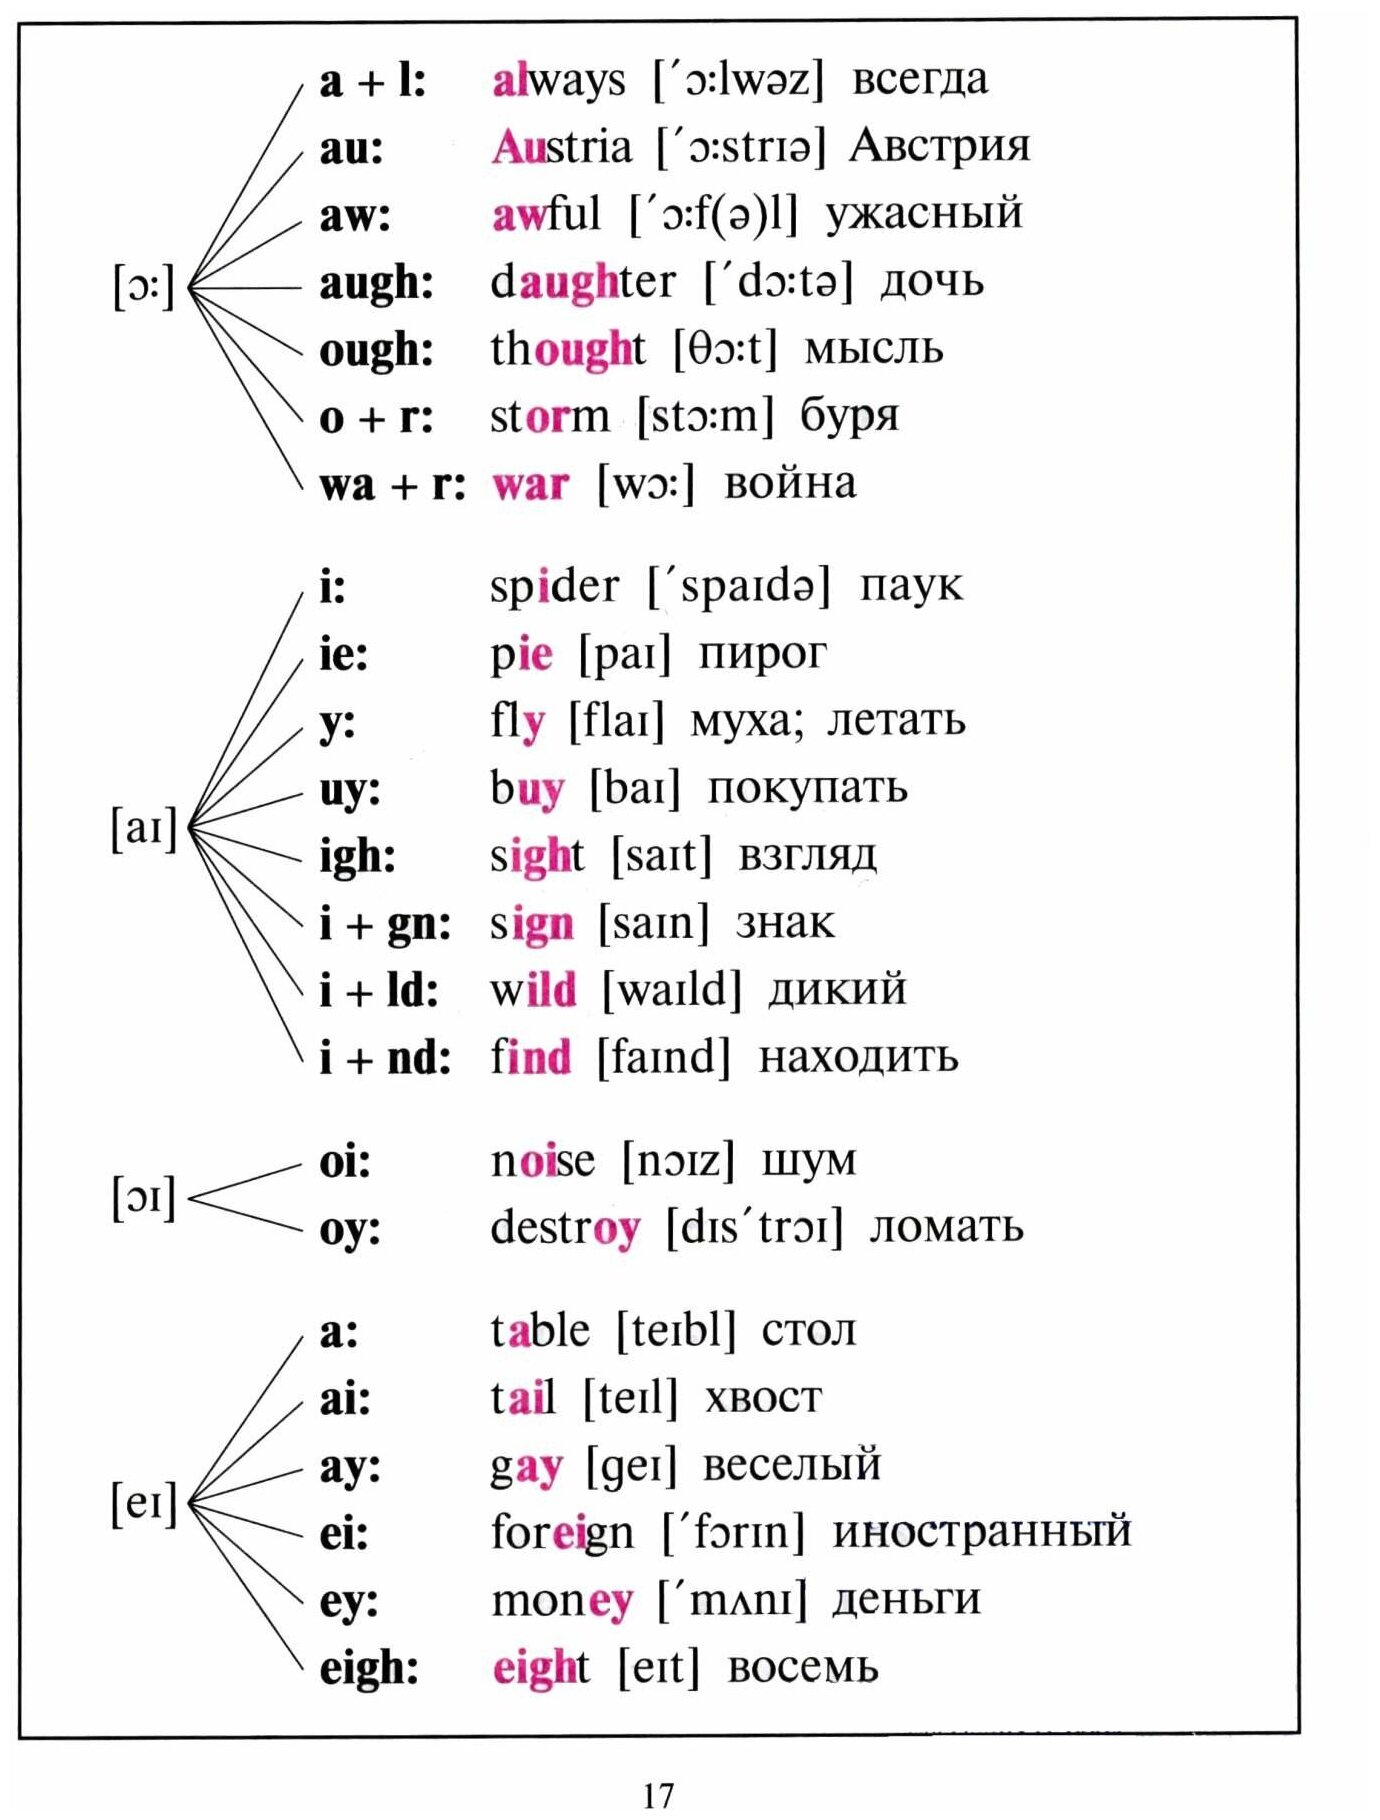 Английская грамматика в таблицах и схемах - фото №6